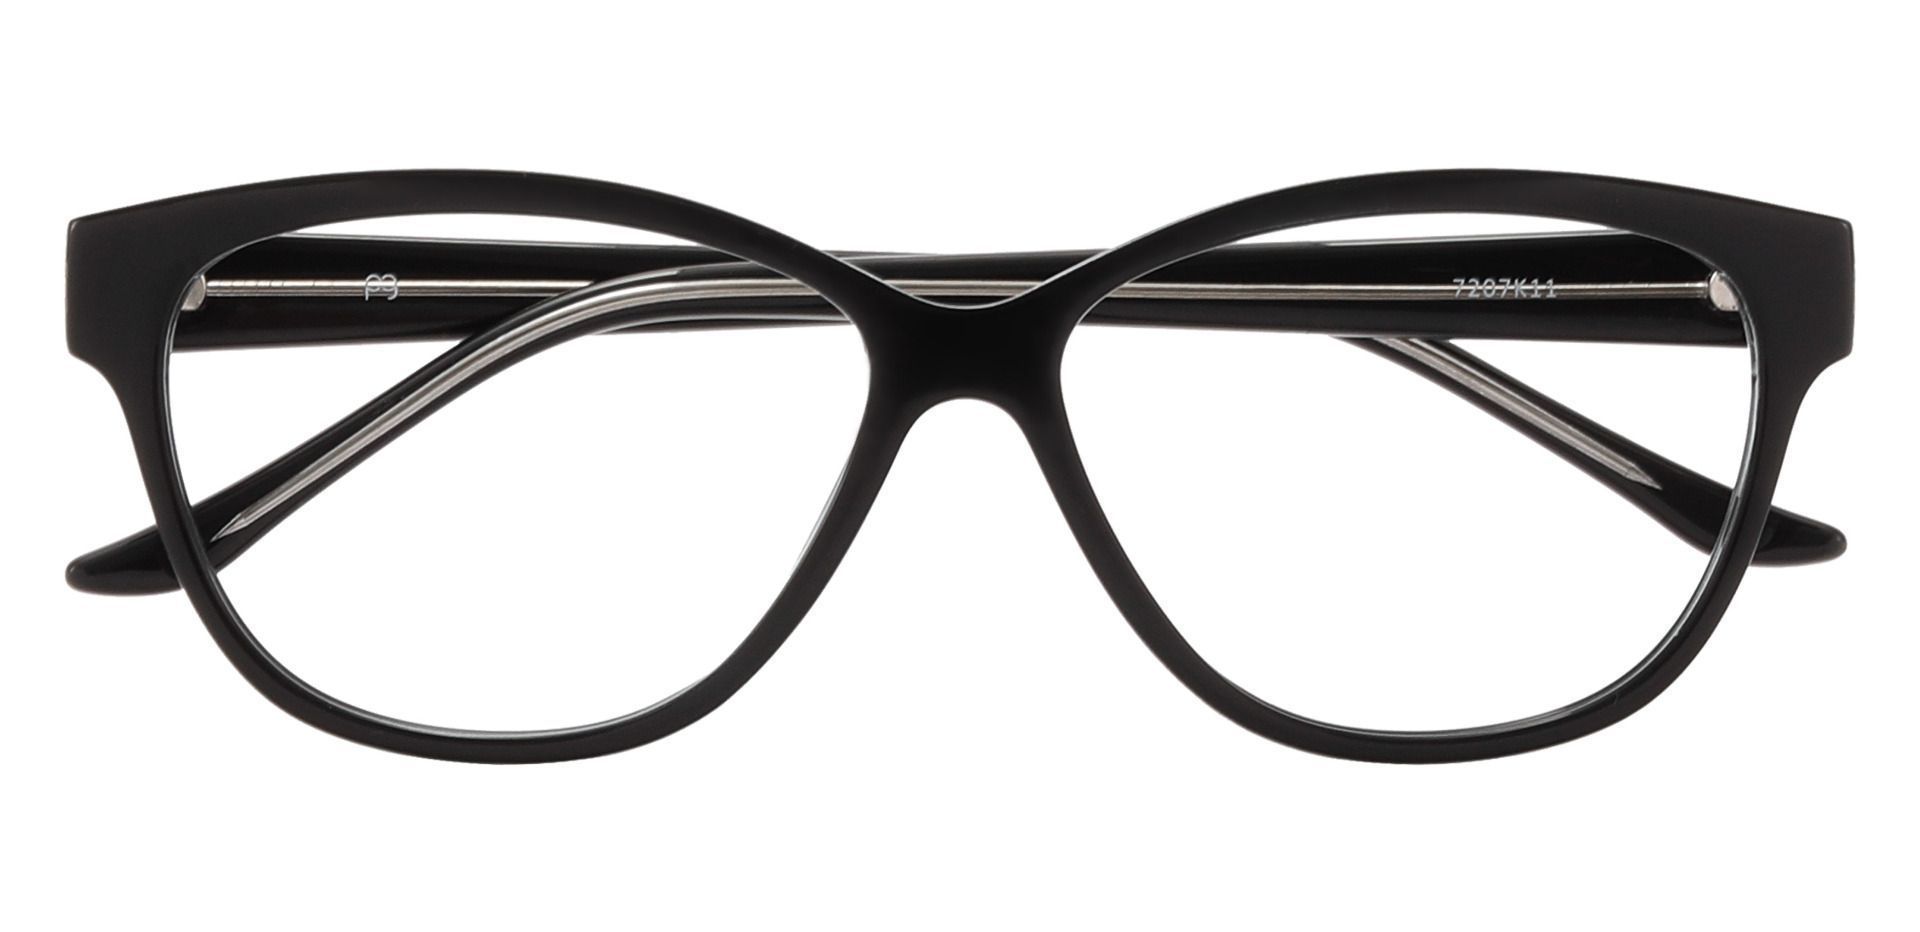 Borden Cat Eye Prescription Glasses - Black